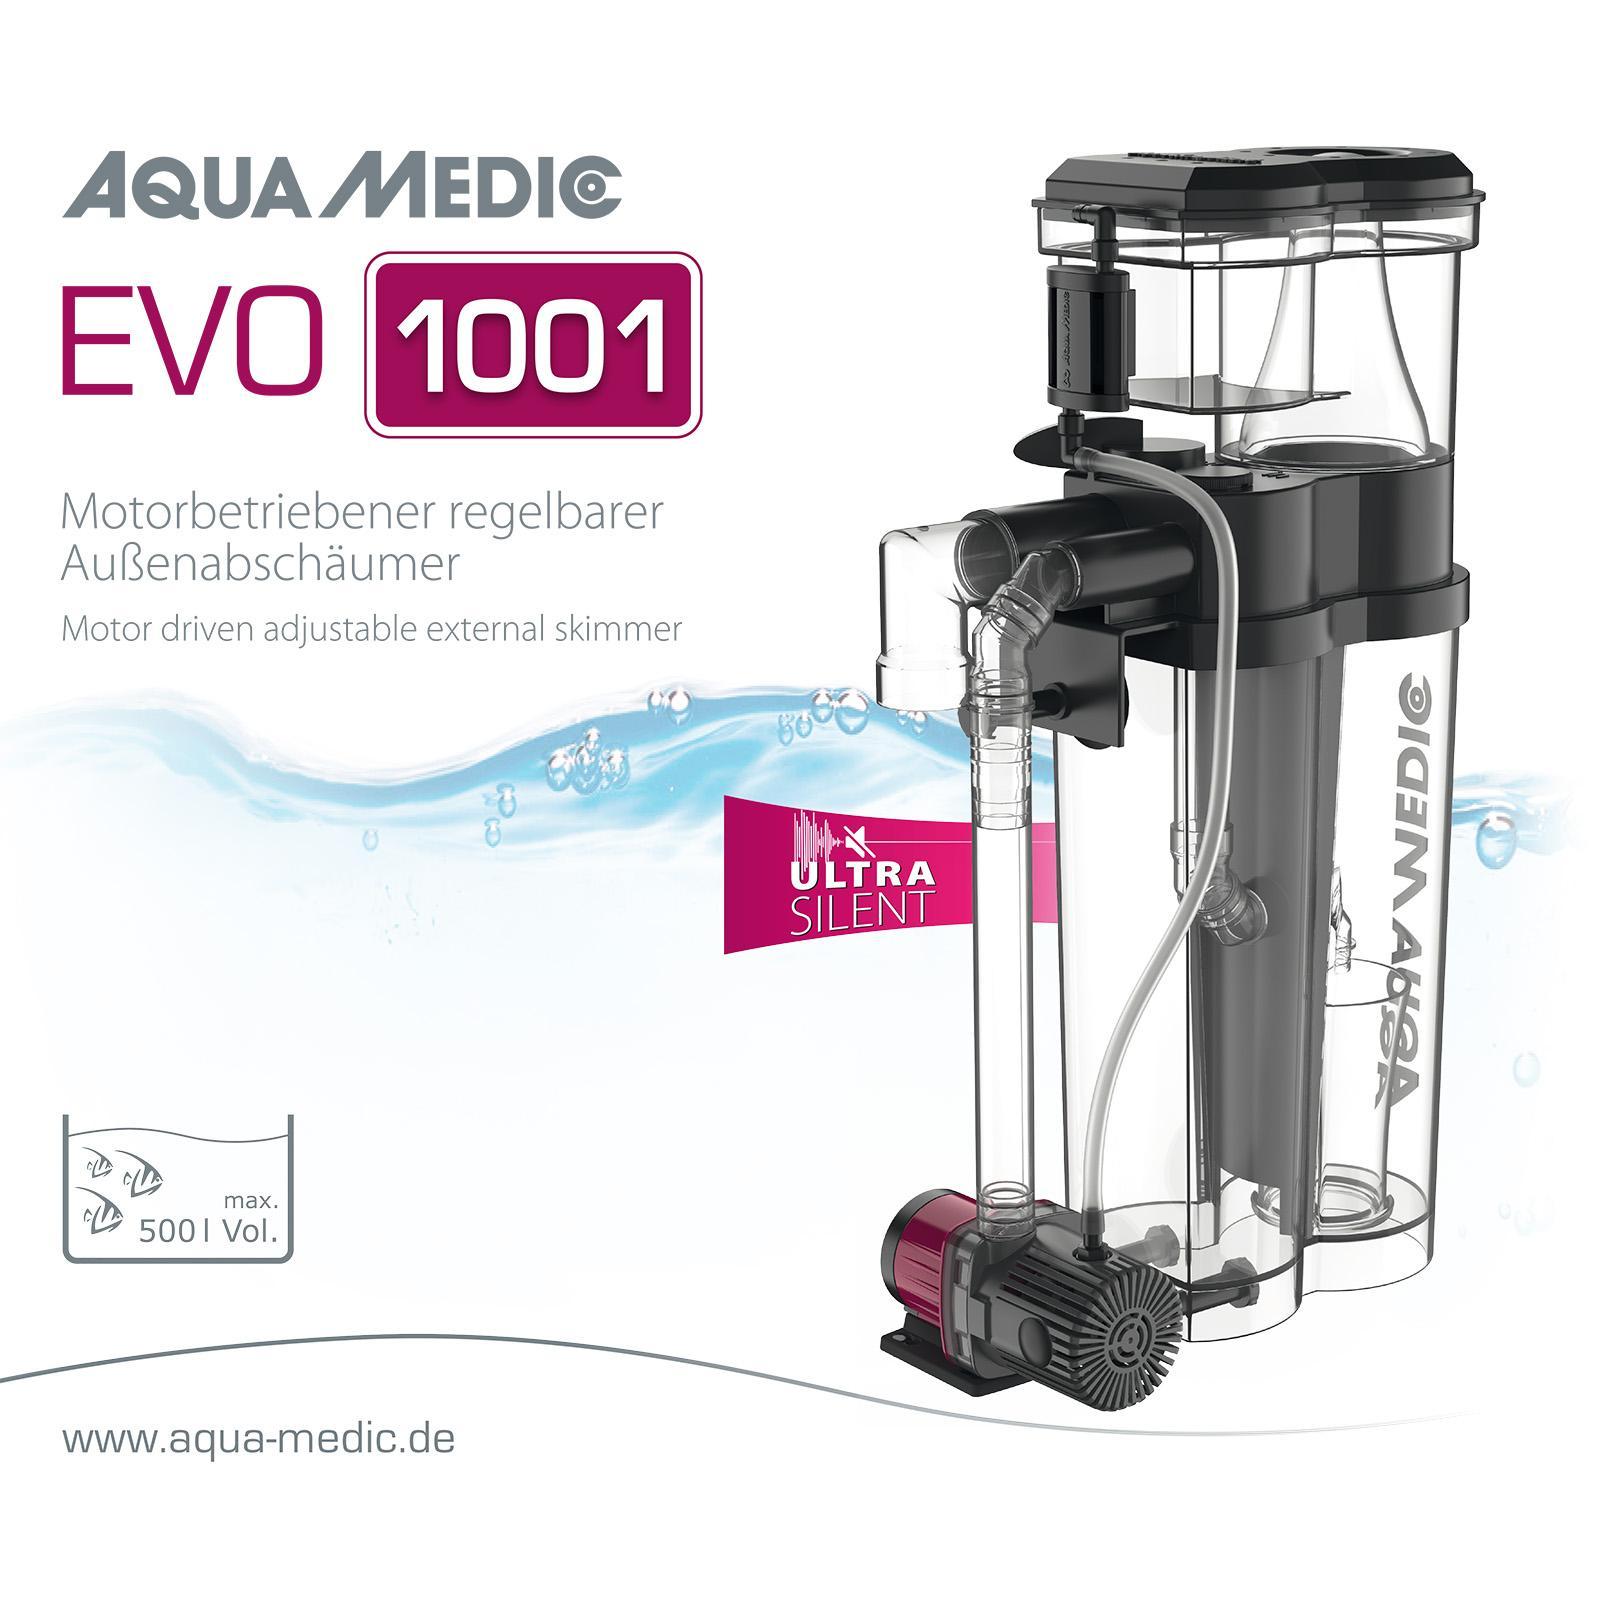 aqua-medic-evo-1001-dc-runner-1000-ecumeur-externe-pour-aquarium-jusqu-a-500-l-1